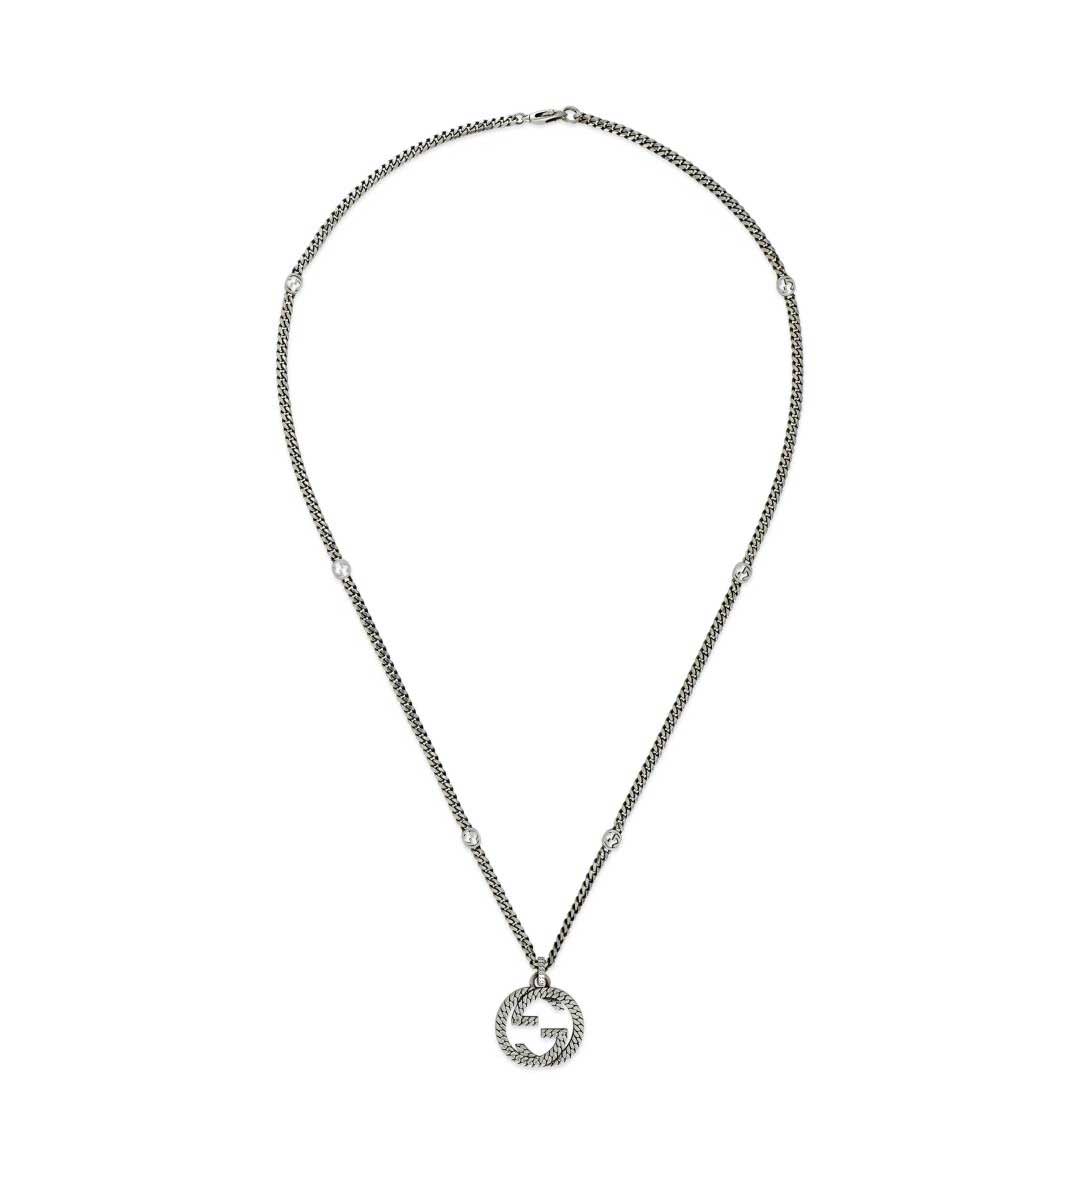 Gucci "Interlocking G" Sterling Silver Pendant Necklace